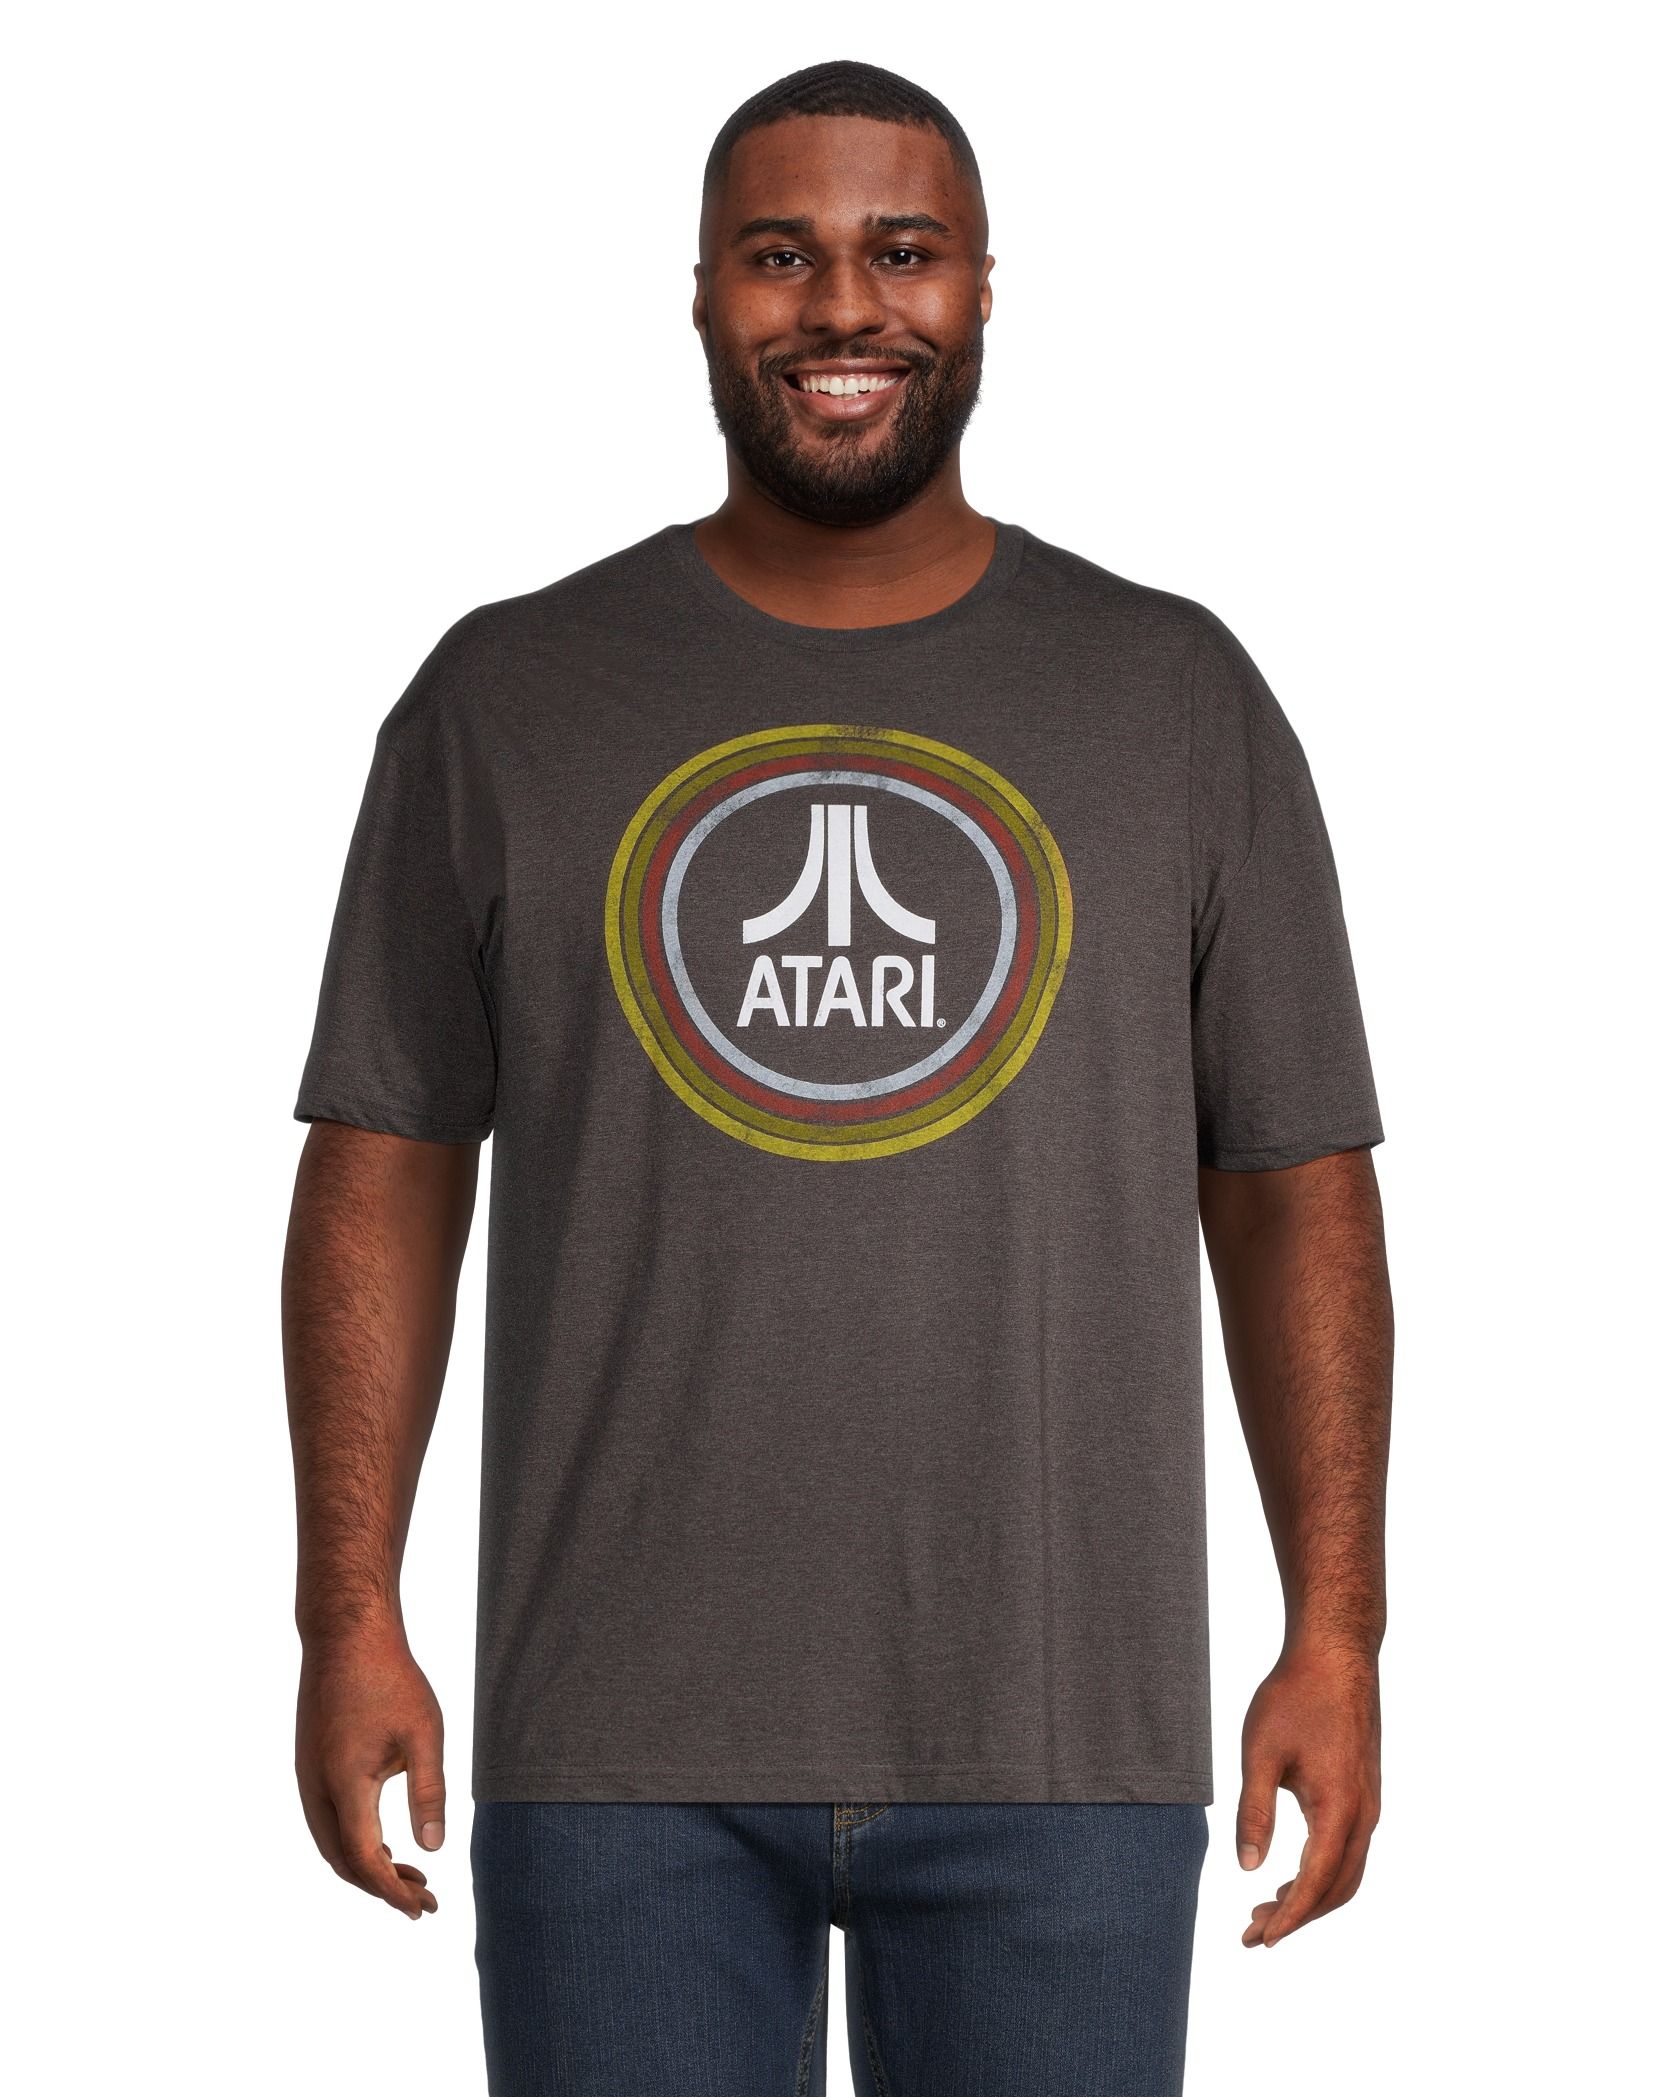 Logo T-Shirt Men's Atari Retro Graphic T Shirt - Charcoal Heather 